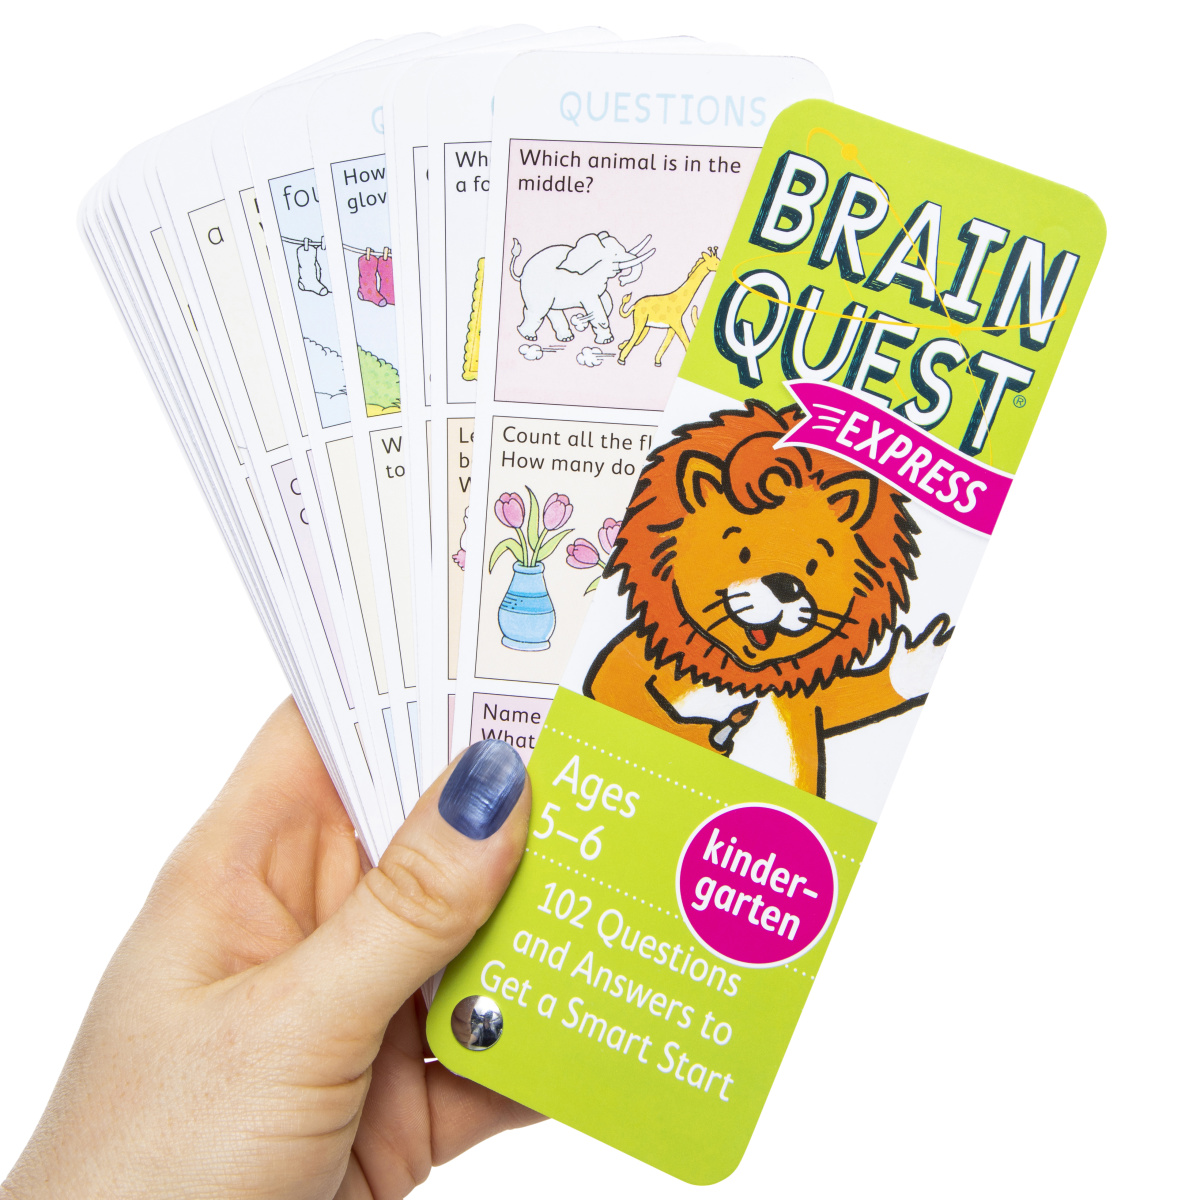 Brain Quest® Express Kindergarten